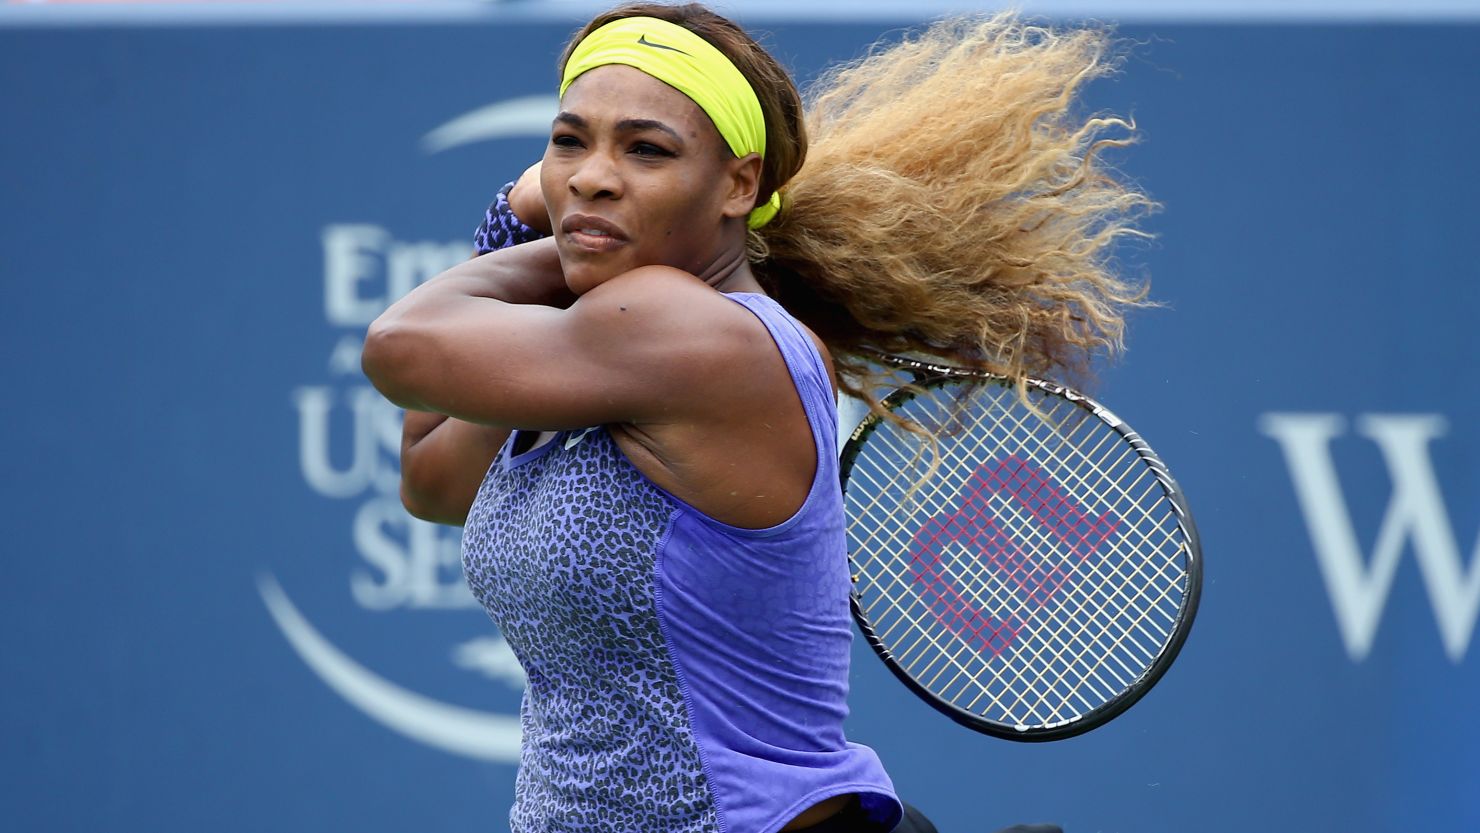 Serena Williams blasted past Ana Ivanovic to win her 62nd WTA title